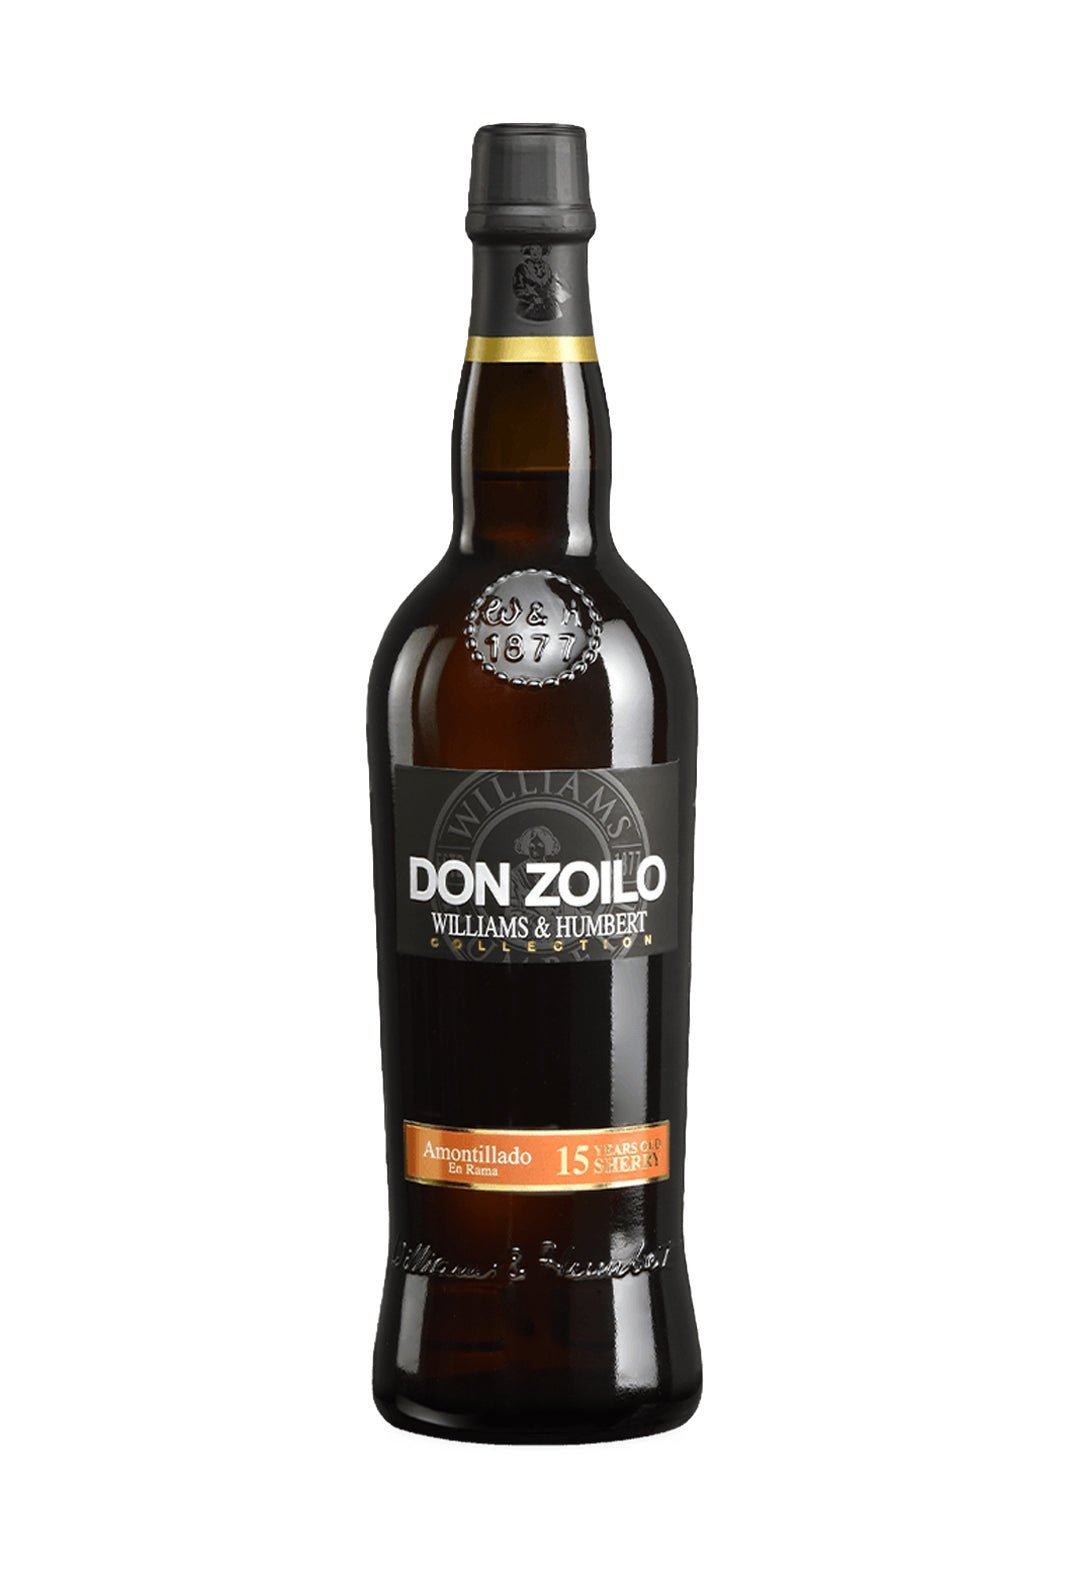 Don Zoilo Sherry Aperitif Amontillado 15 years 19% 750ml | Liquor & Spirits | Shop online at Spirits of France